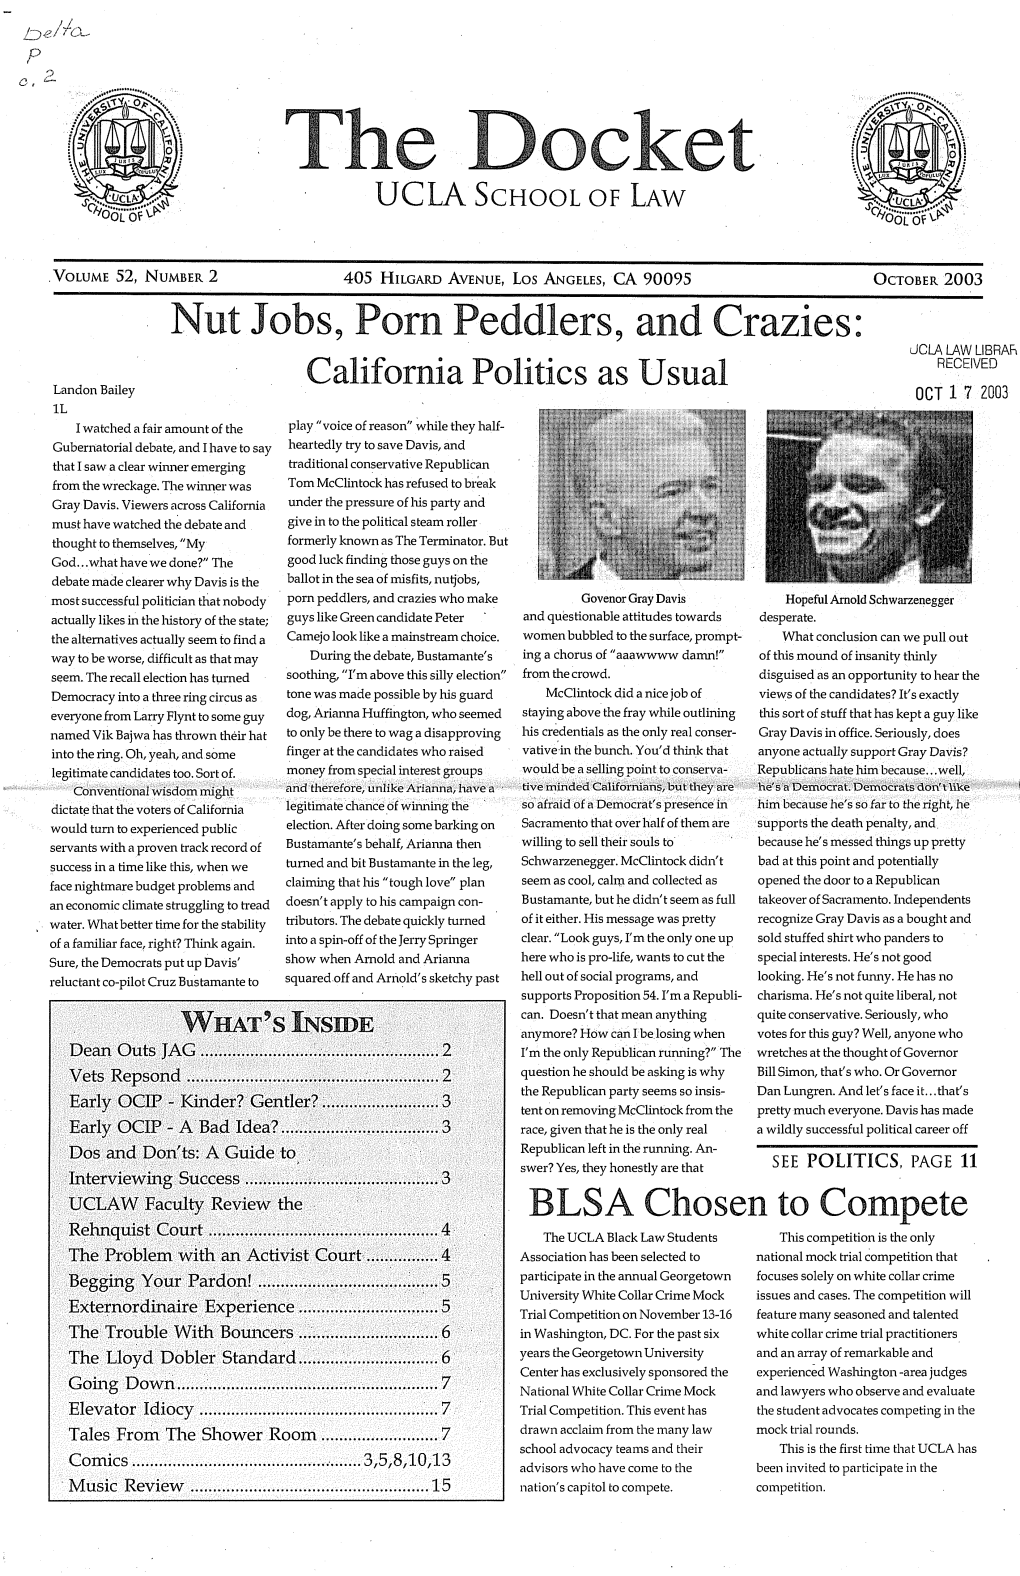 Ut Jobs, Porn Peddlers, and Crazies